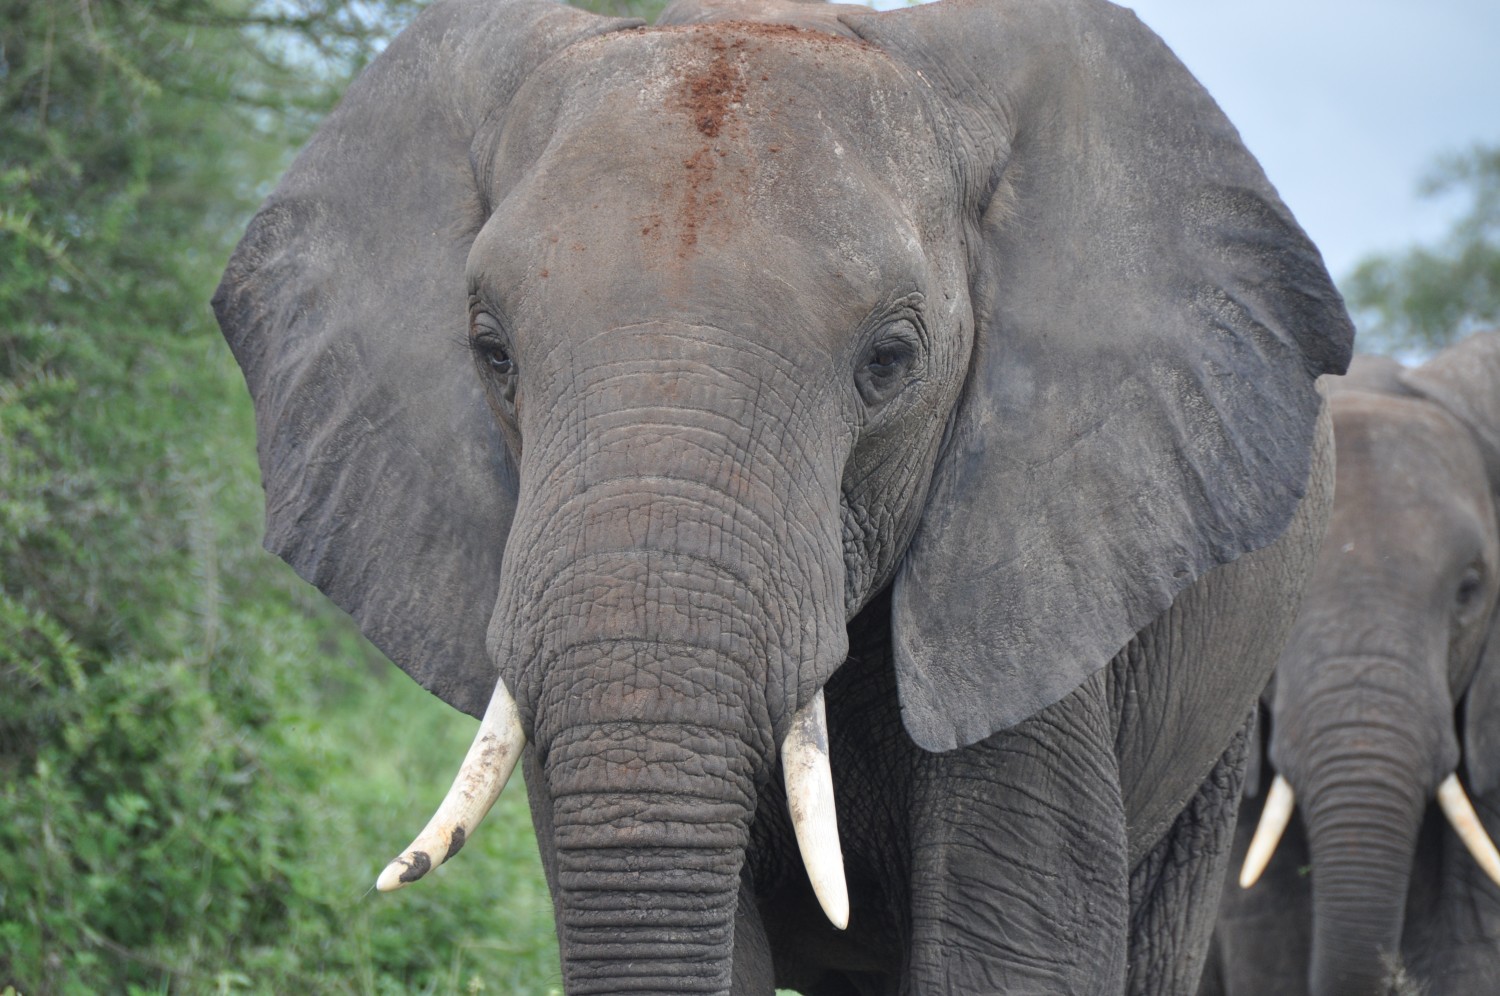 Frontal shot of elephant